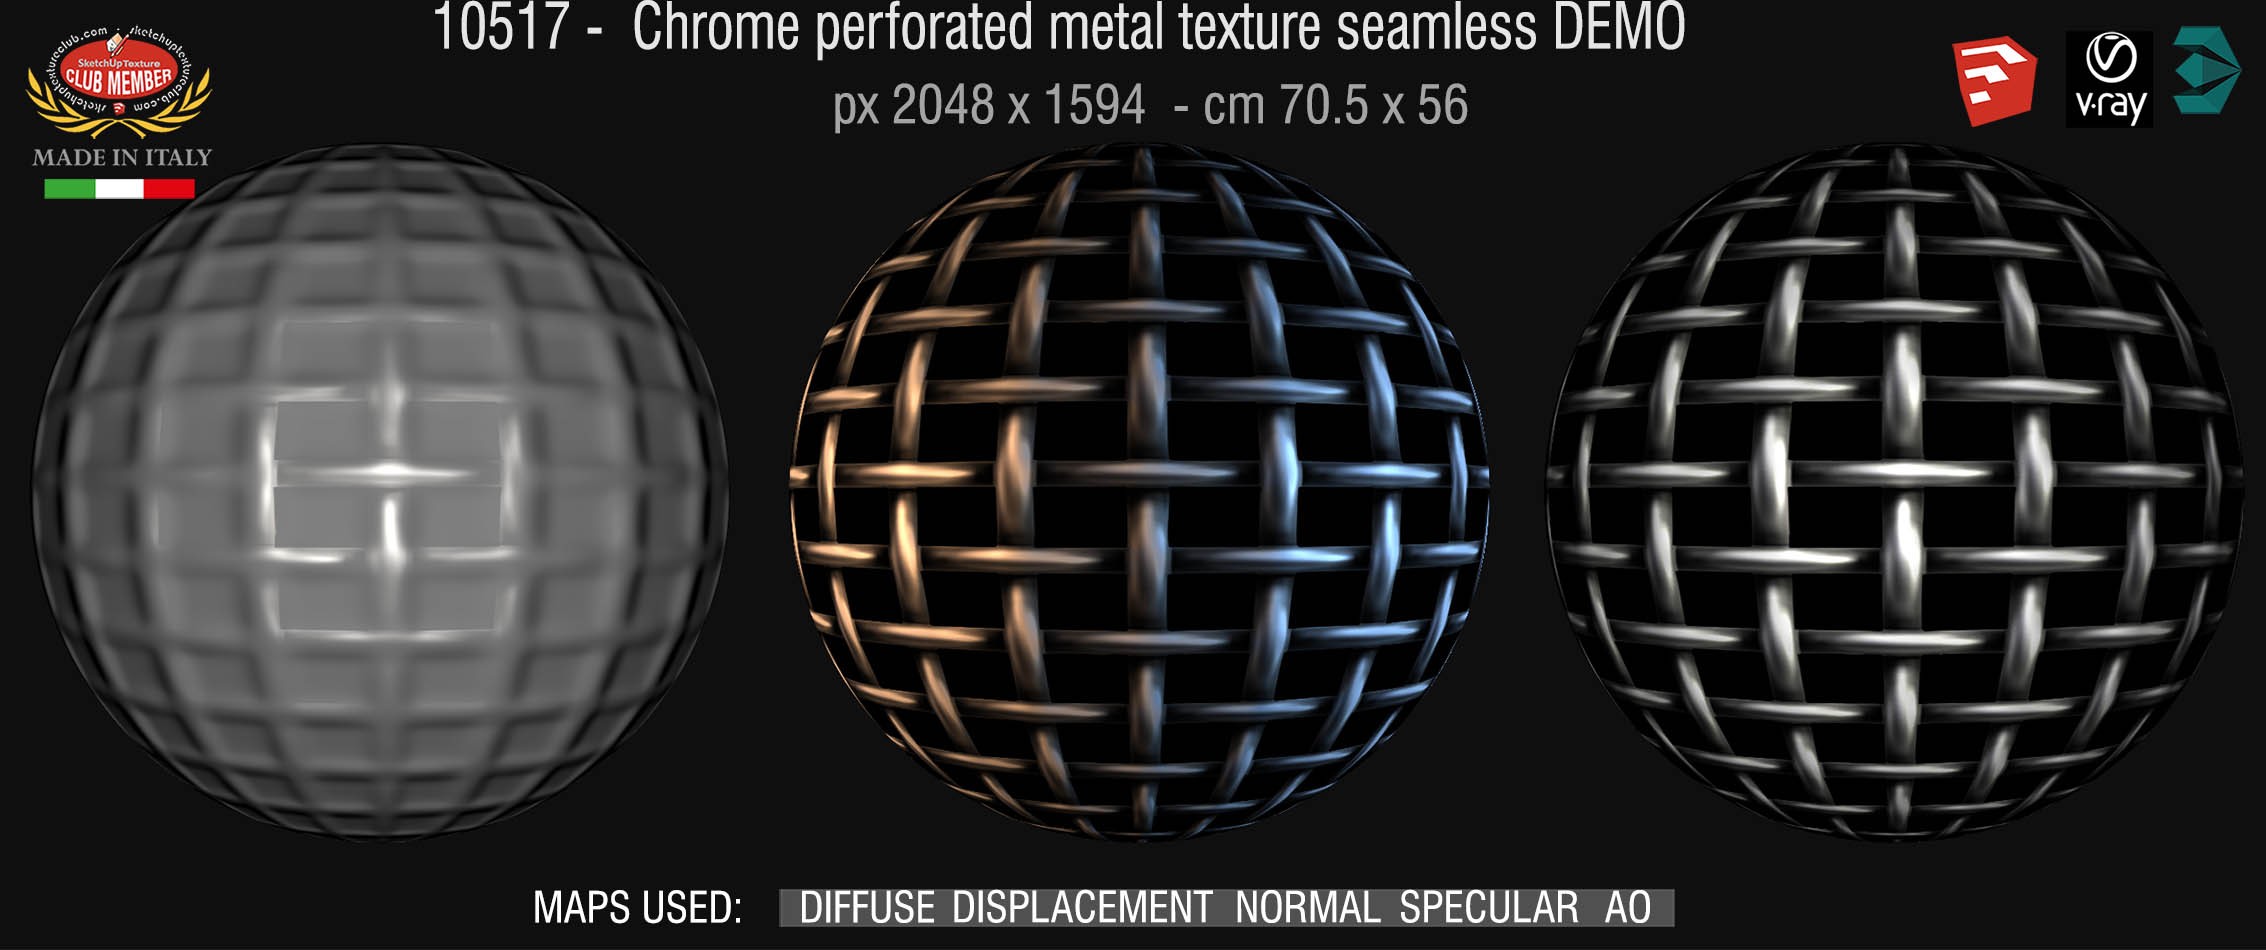 10517 HR Chrome perforated metal texture seamless + maps DEMO